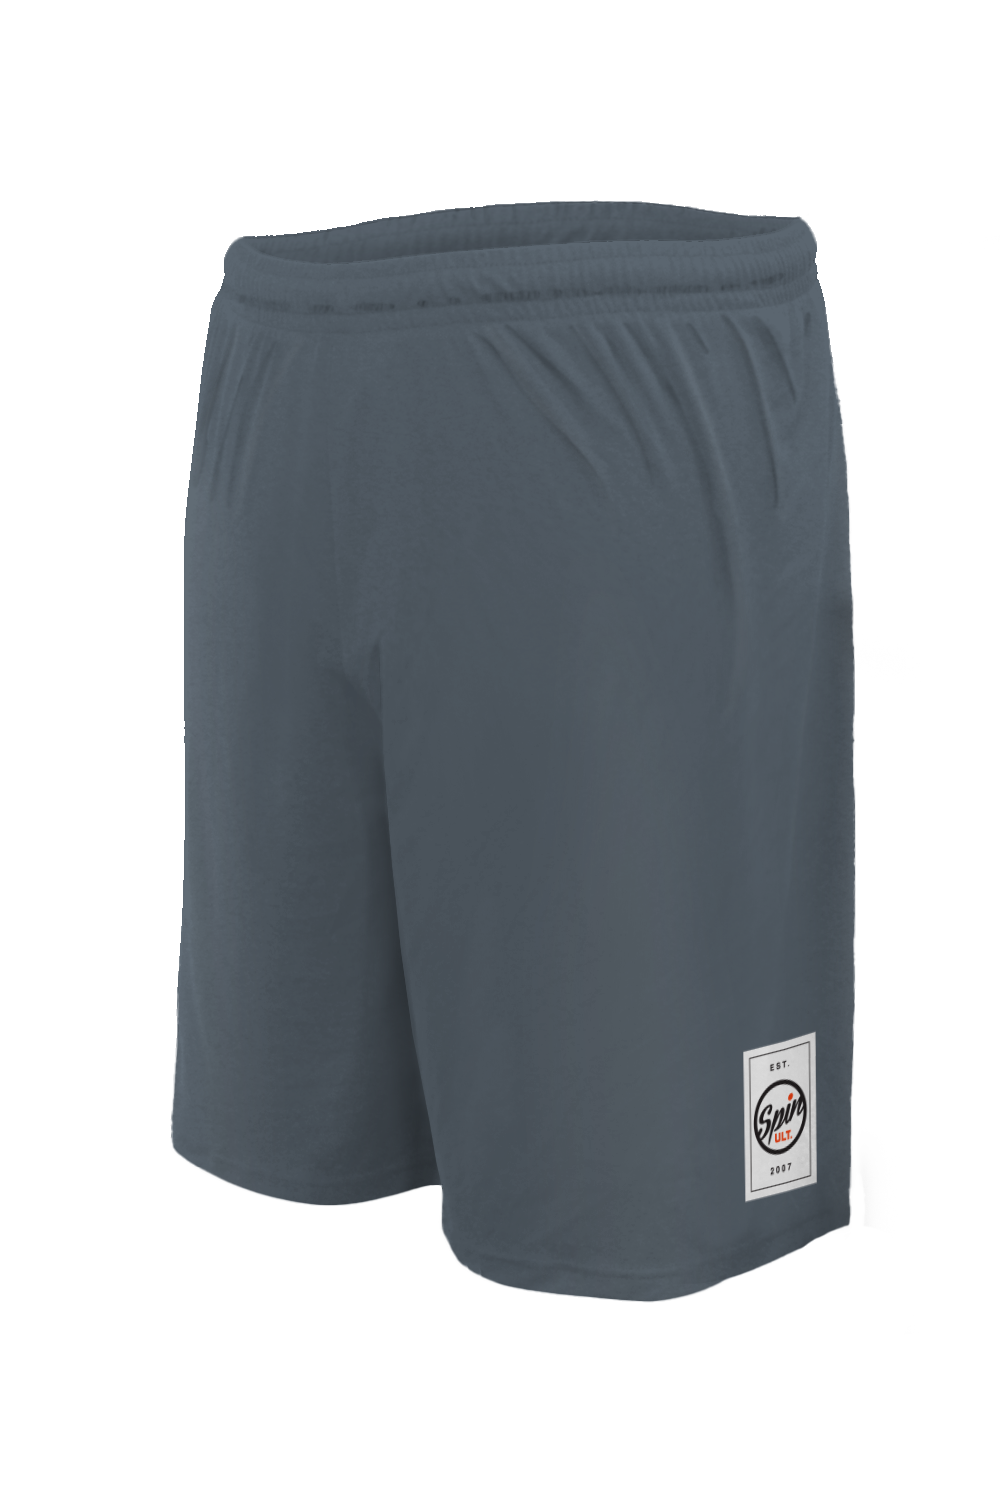 Micro Shorts (Charcoal)